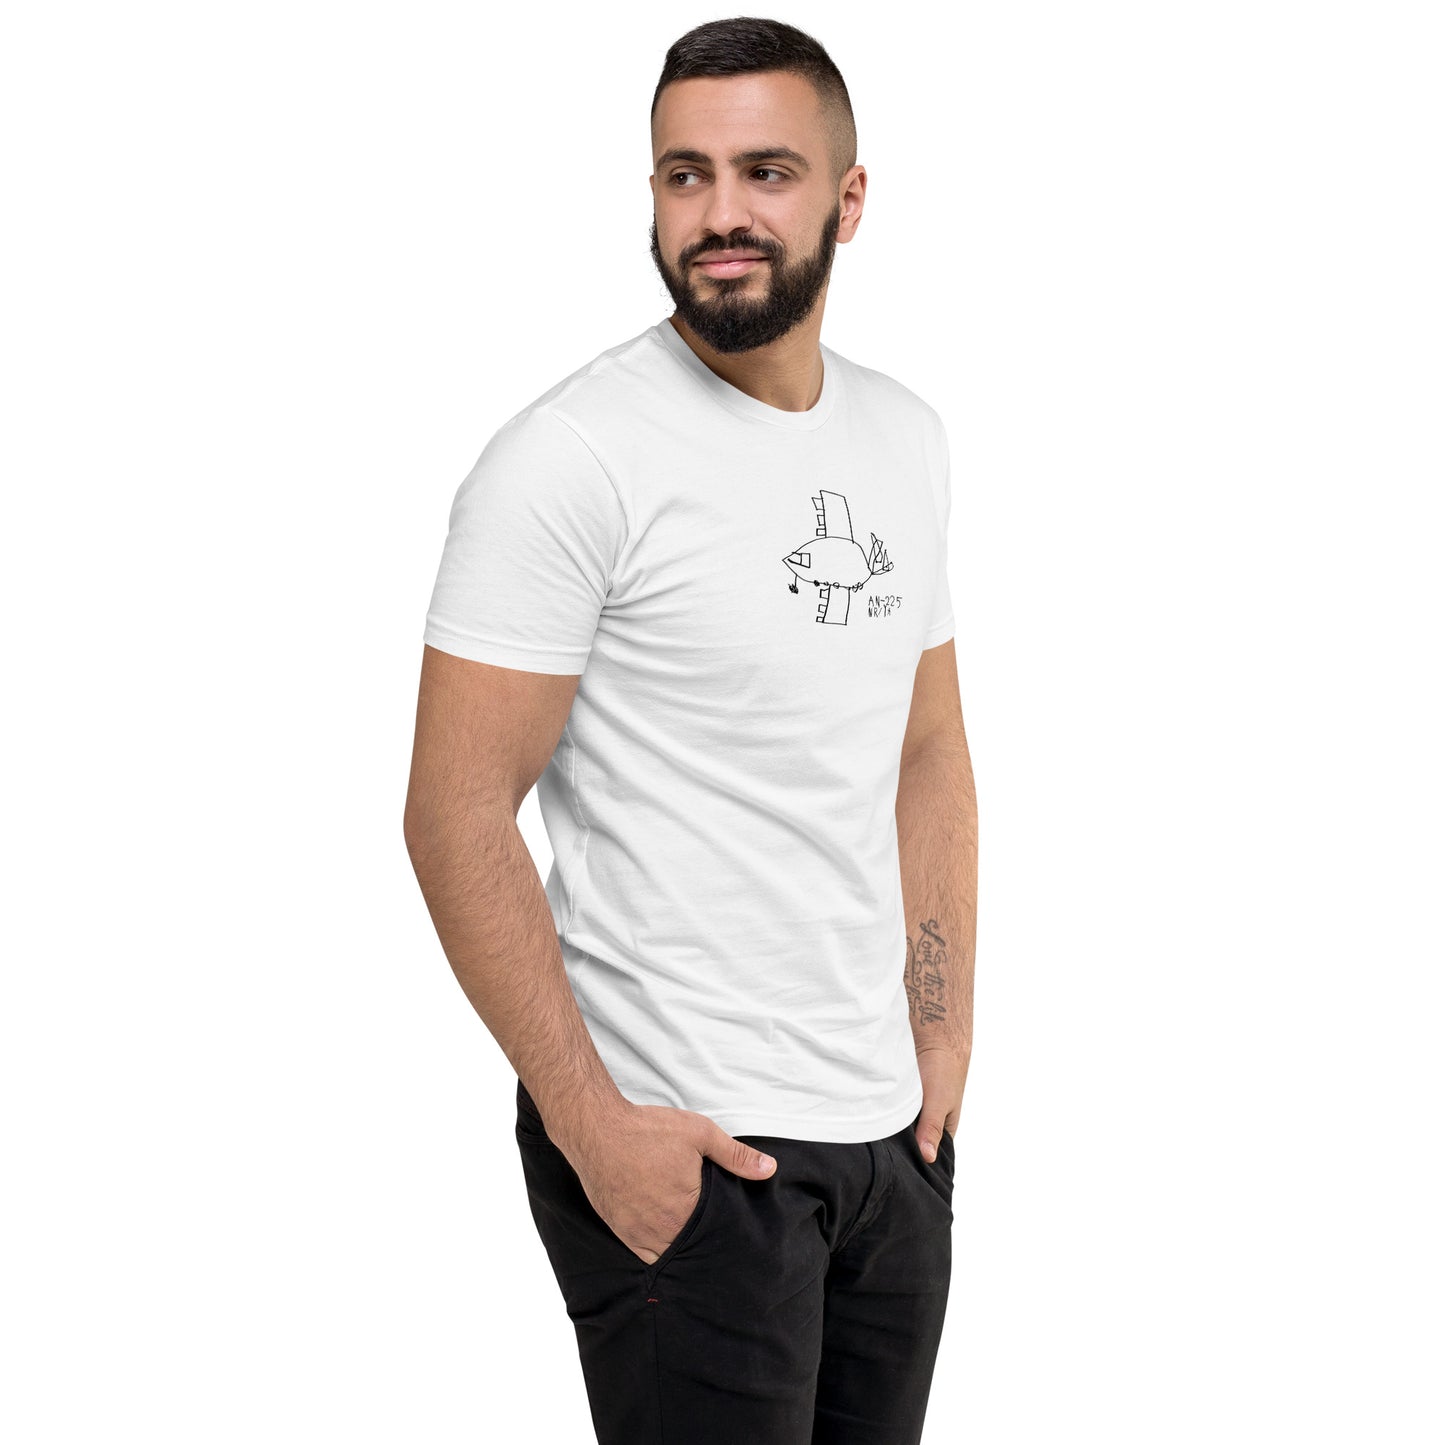 AN 225 Mriya Short Sleeve T-shirt